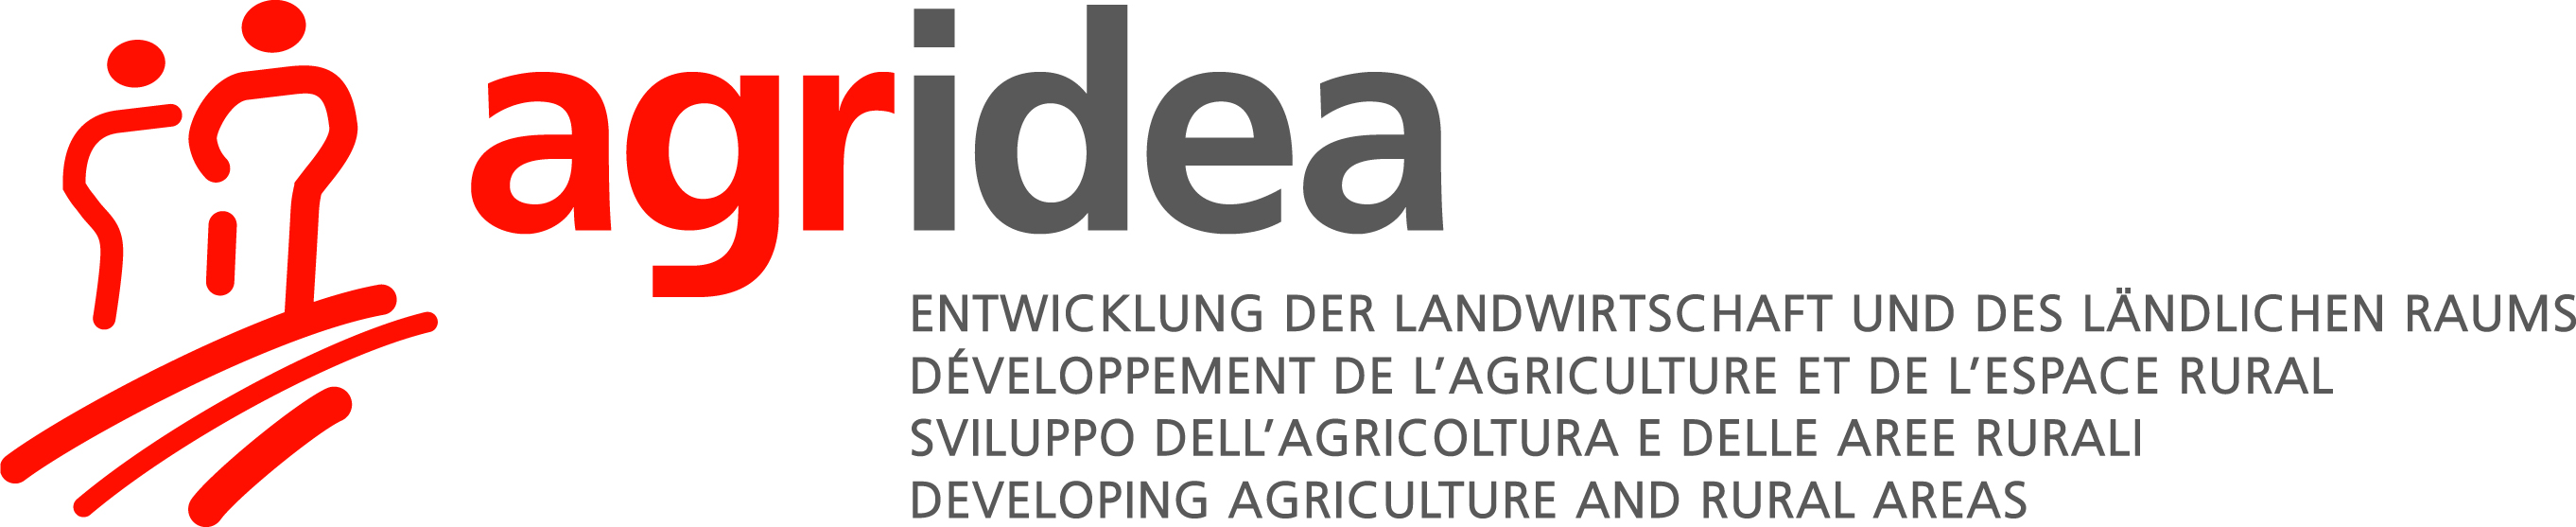 Agridea Logo photo - 1